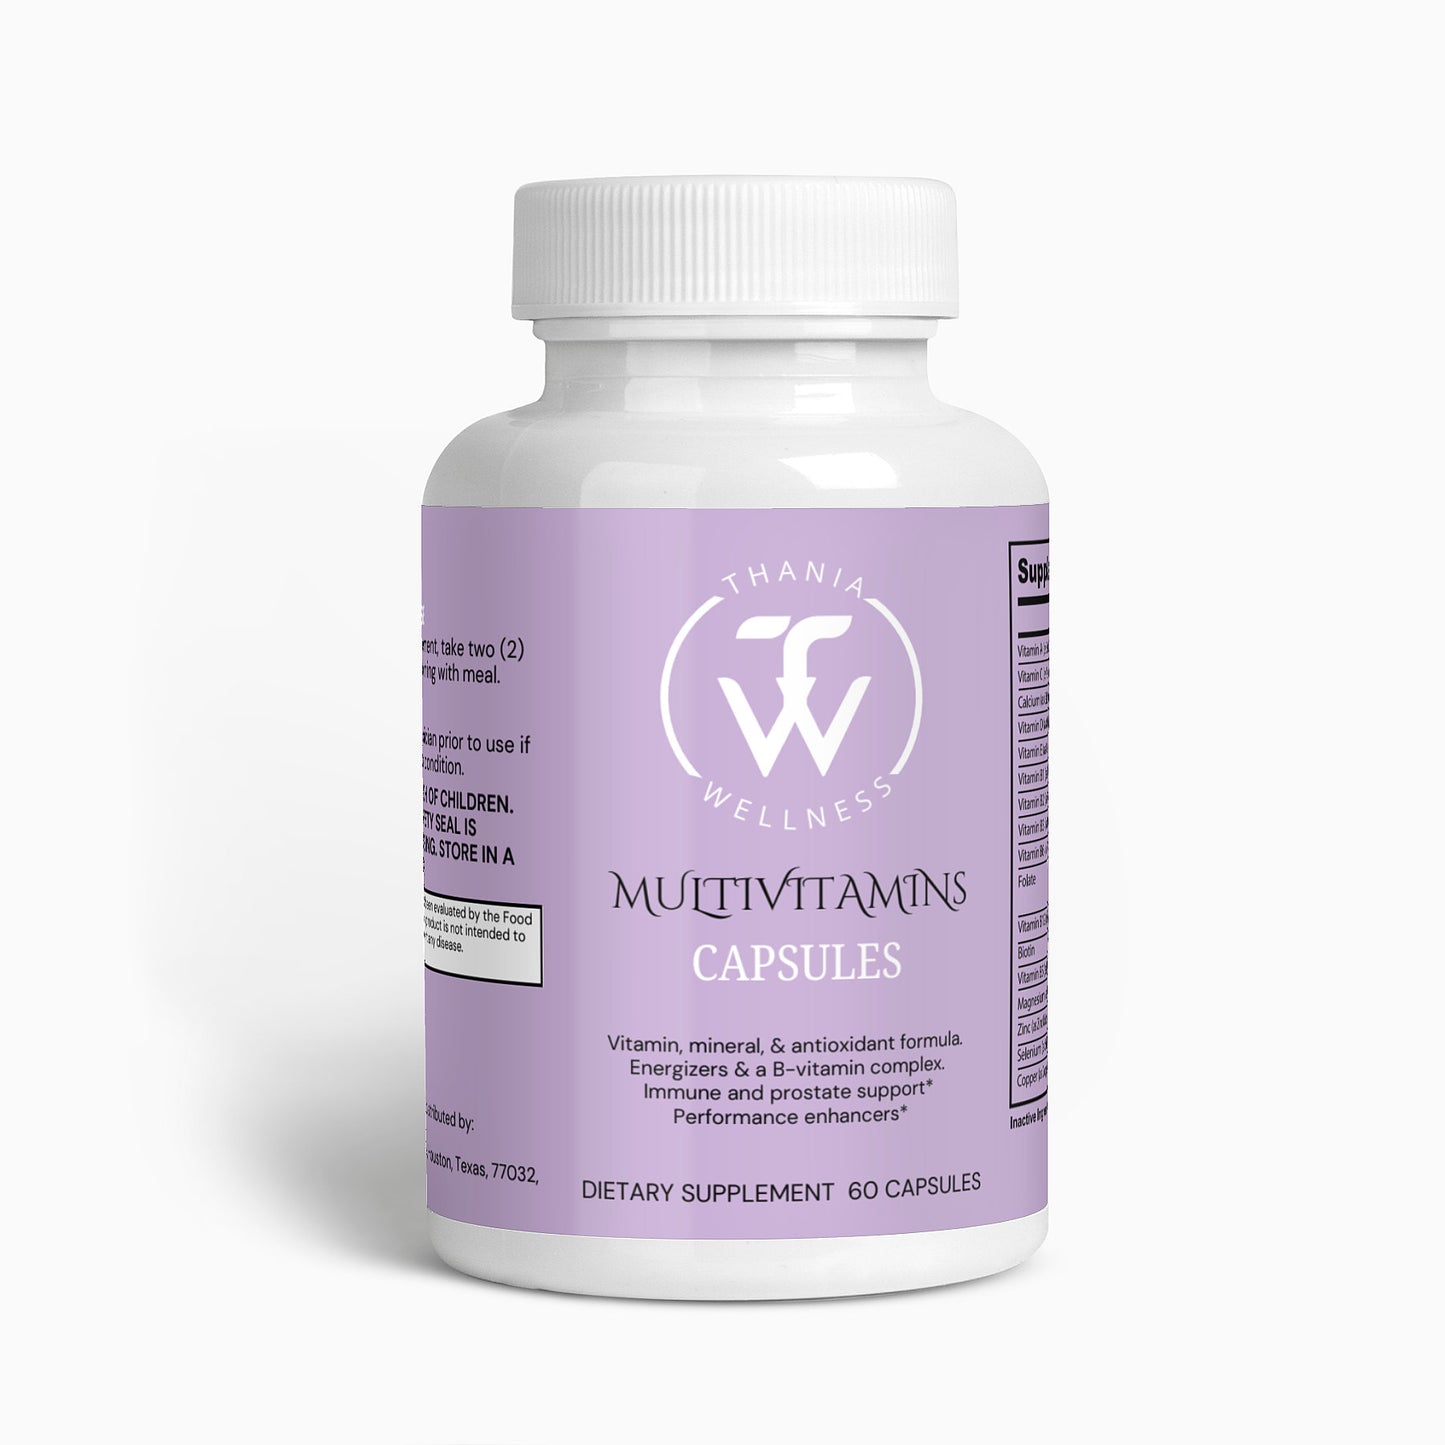 Multivitamins